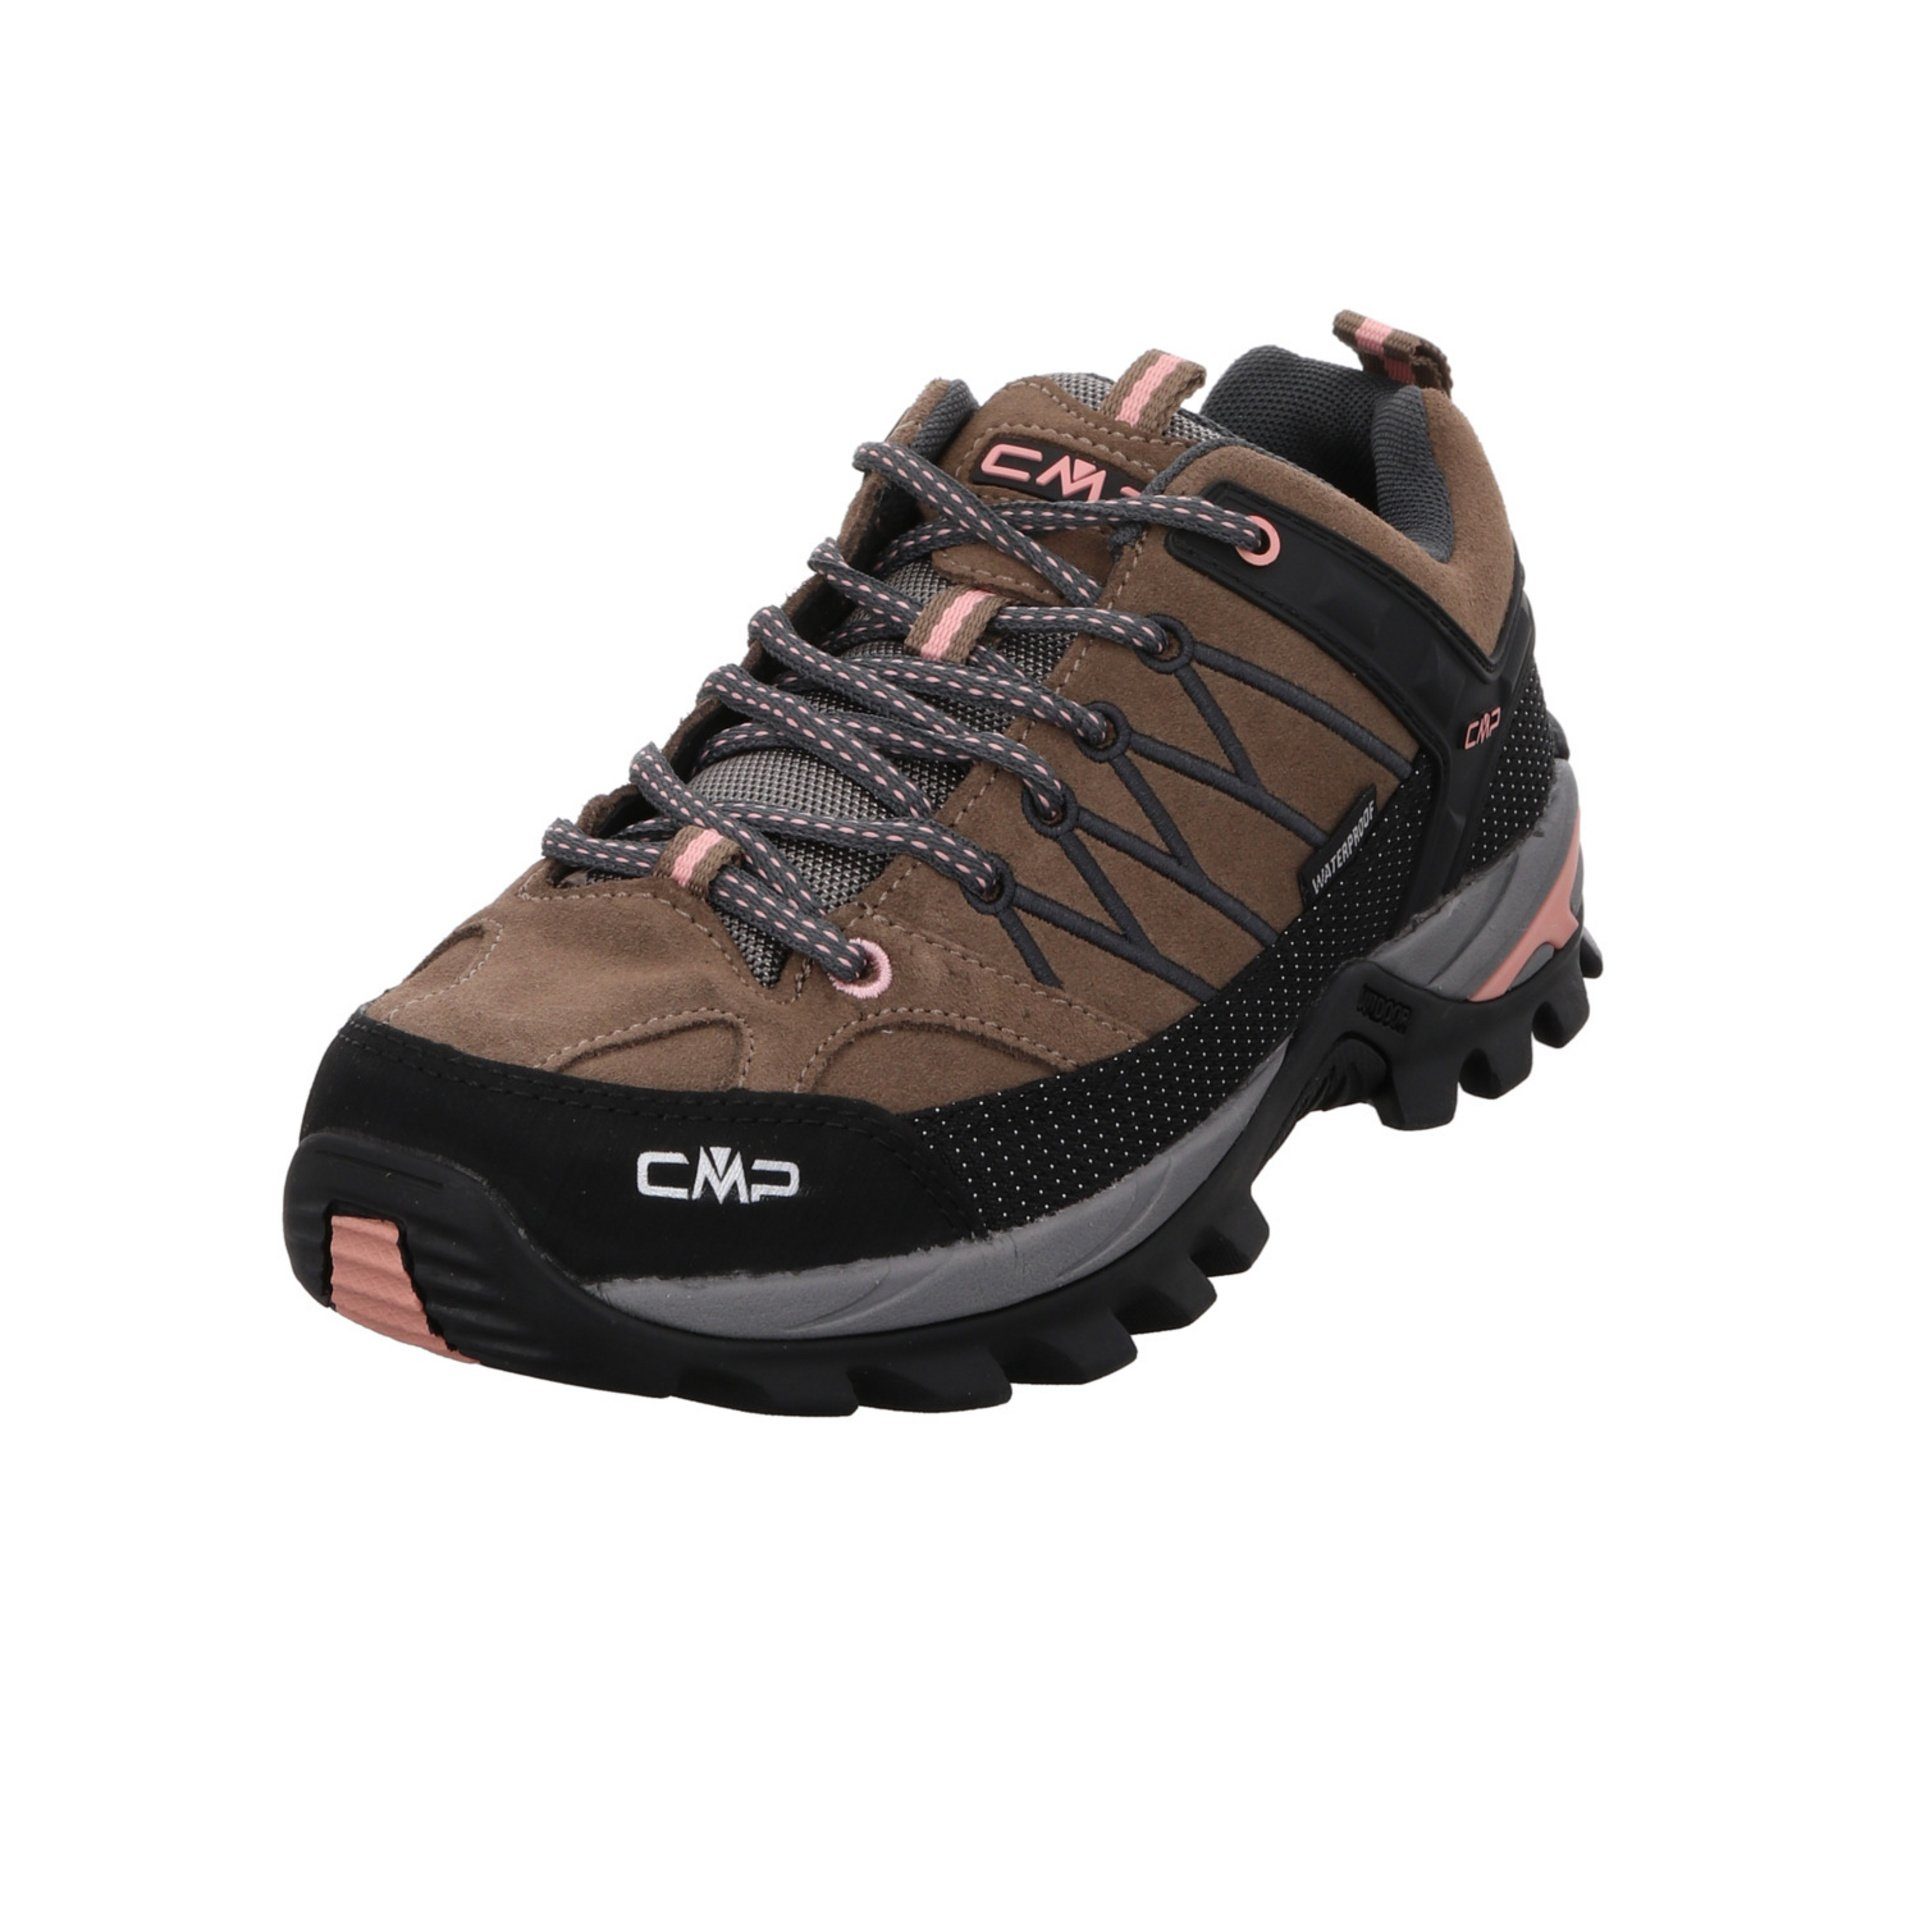 Low Damen CENERE Schuhe CMP Leder-/Textilkombination CAMPAGNOLO Rigel Outdoorschuh Outdoorschuh Outdoor